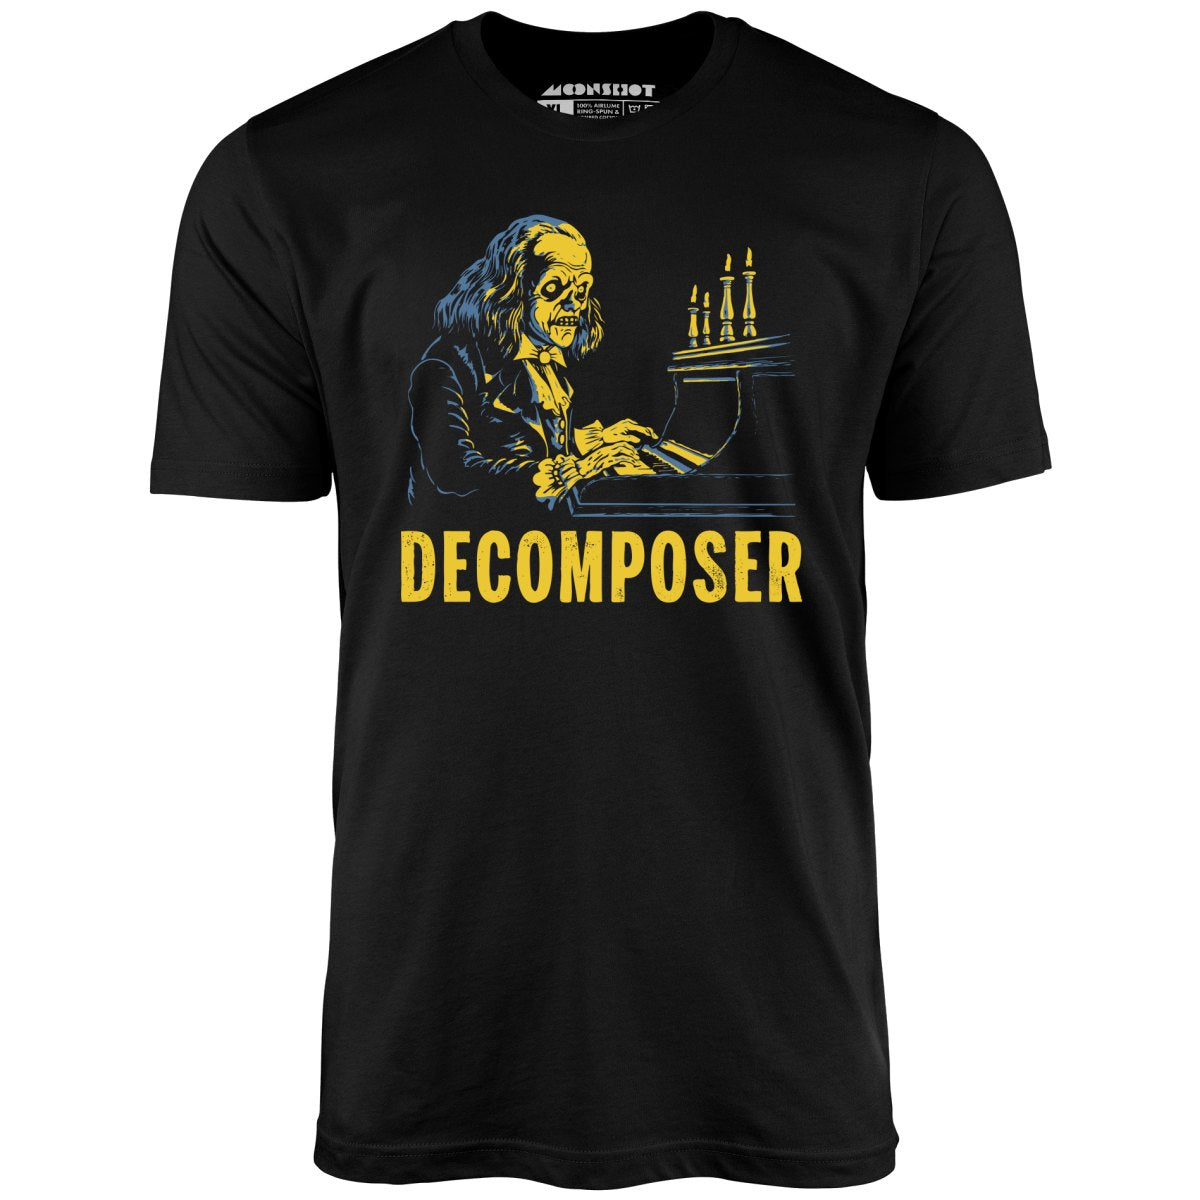 Decomposer - Unisex T-Shirt